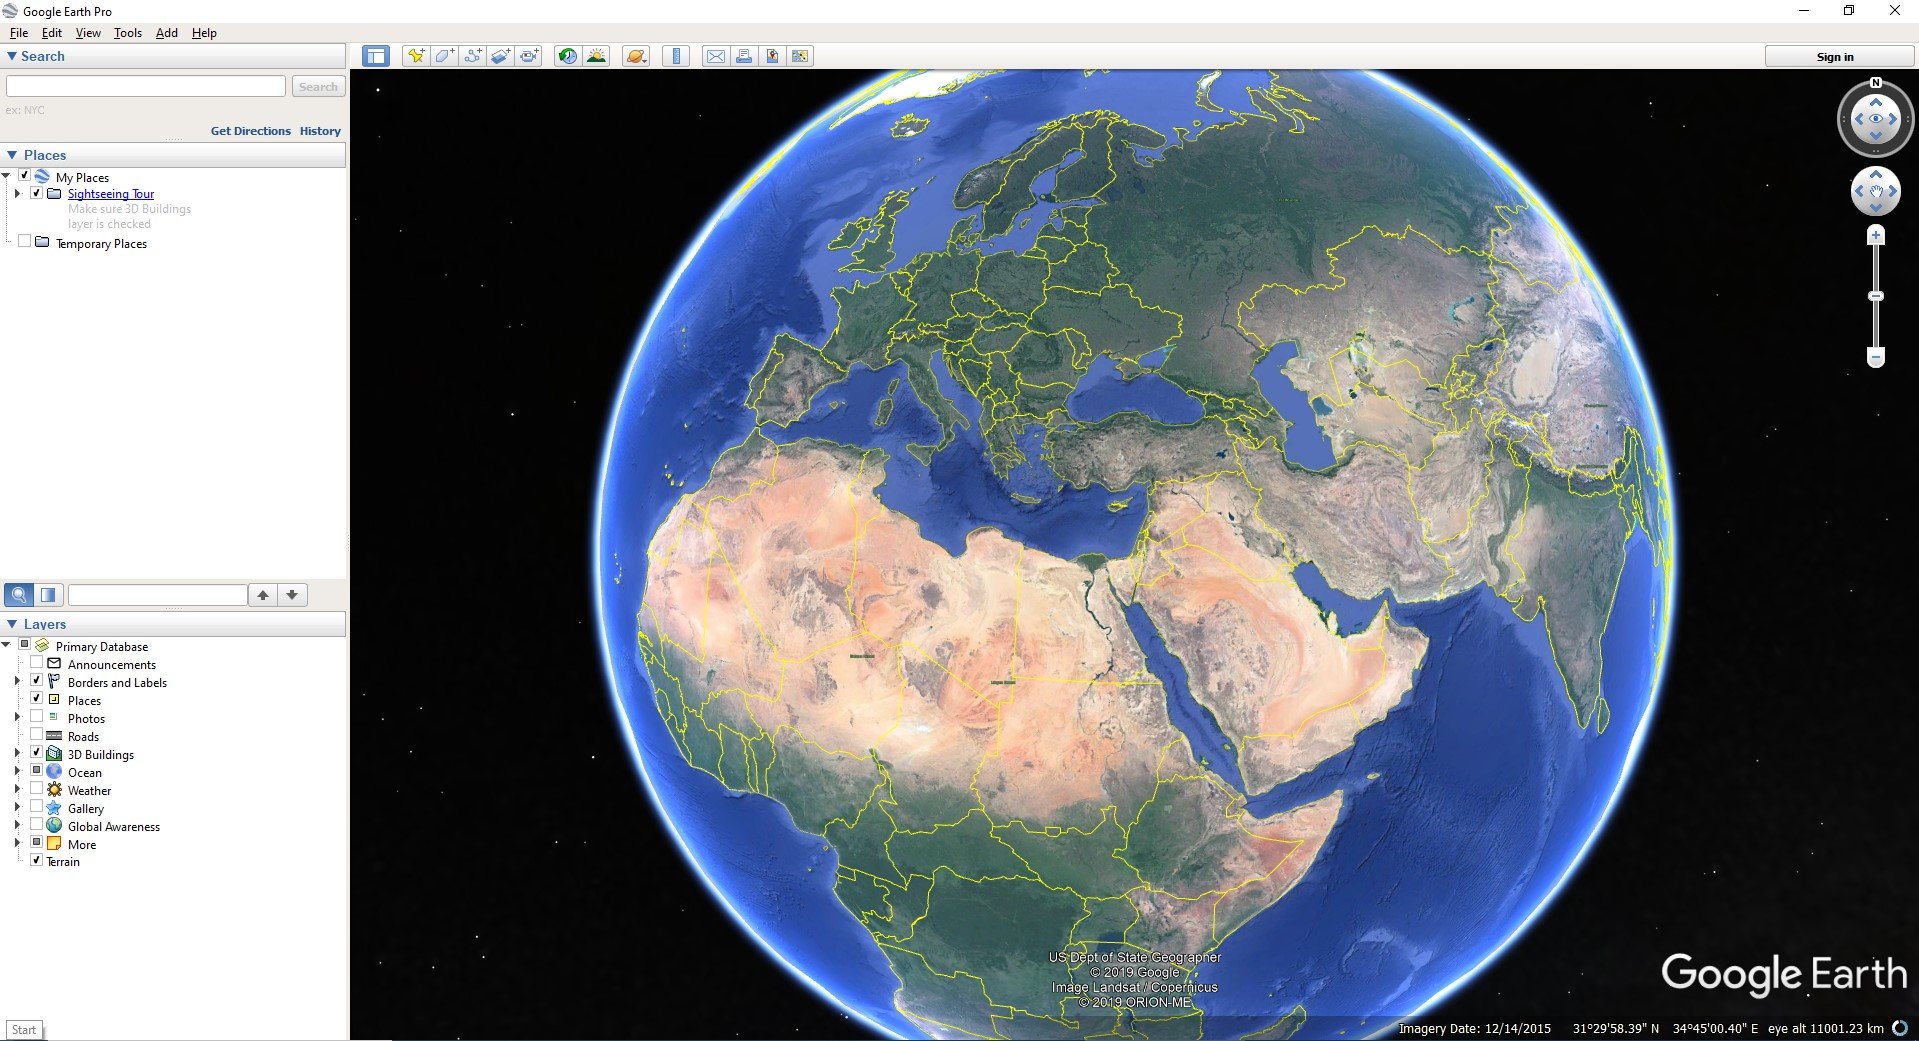 download google earth